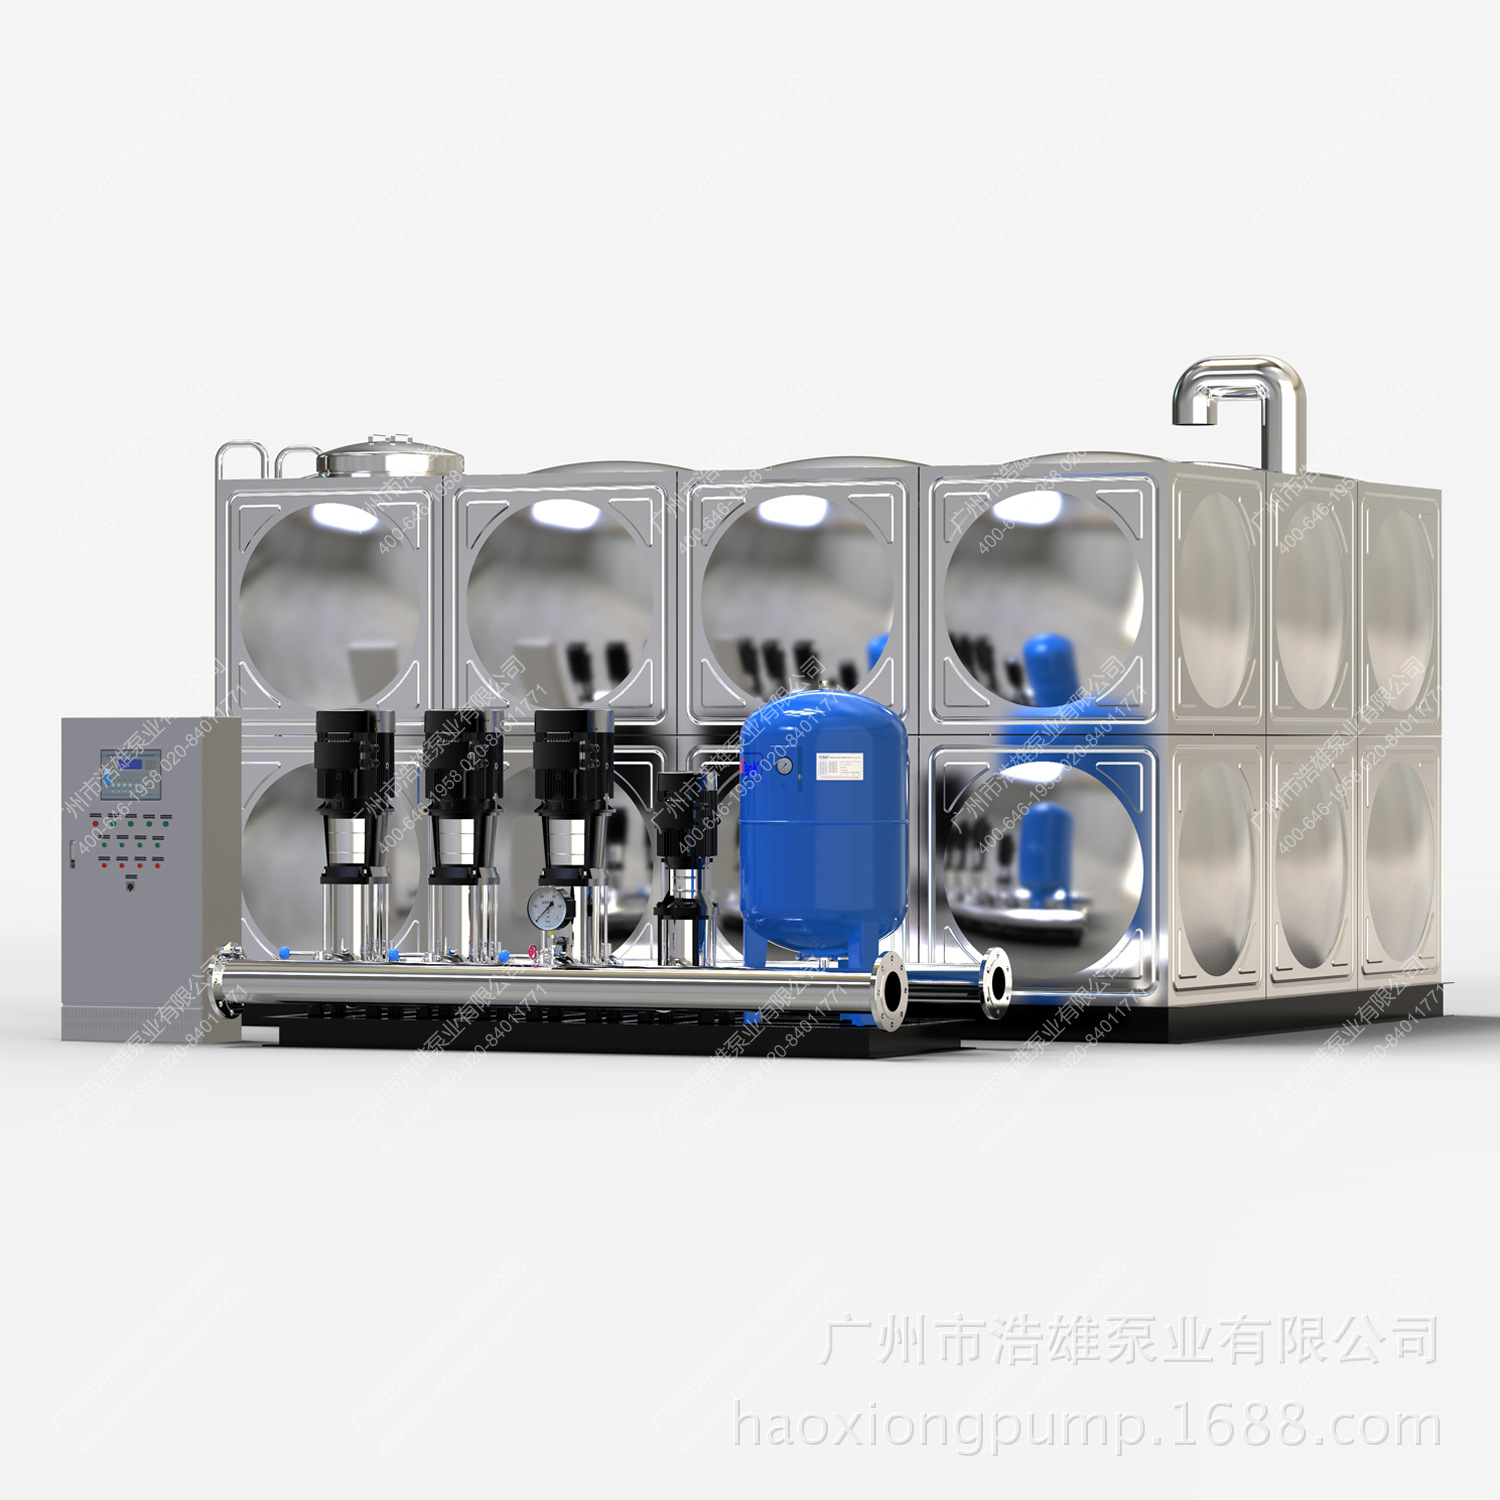 BWS3 1箱式变频恒压供水设备